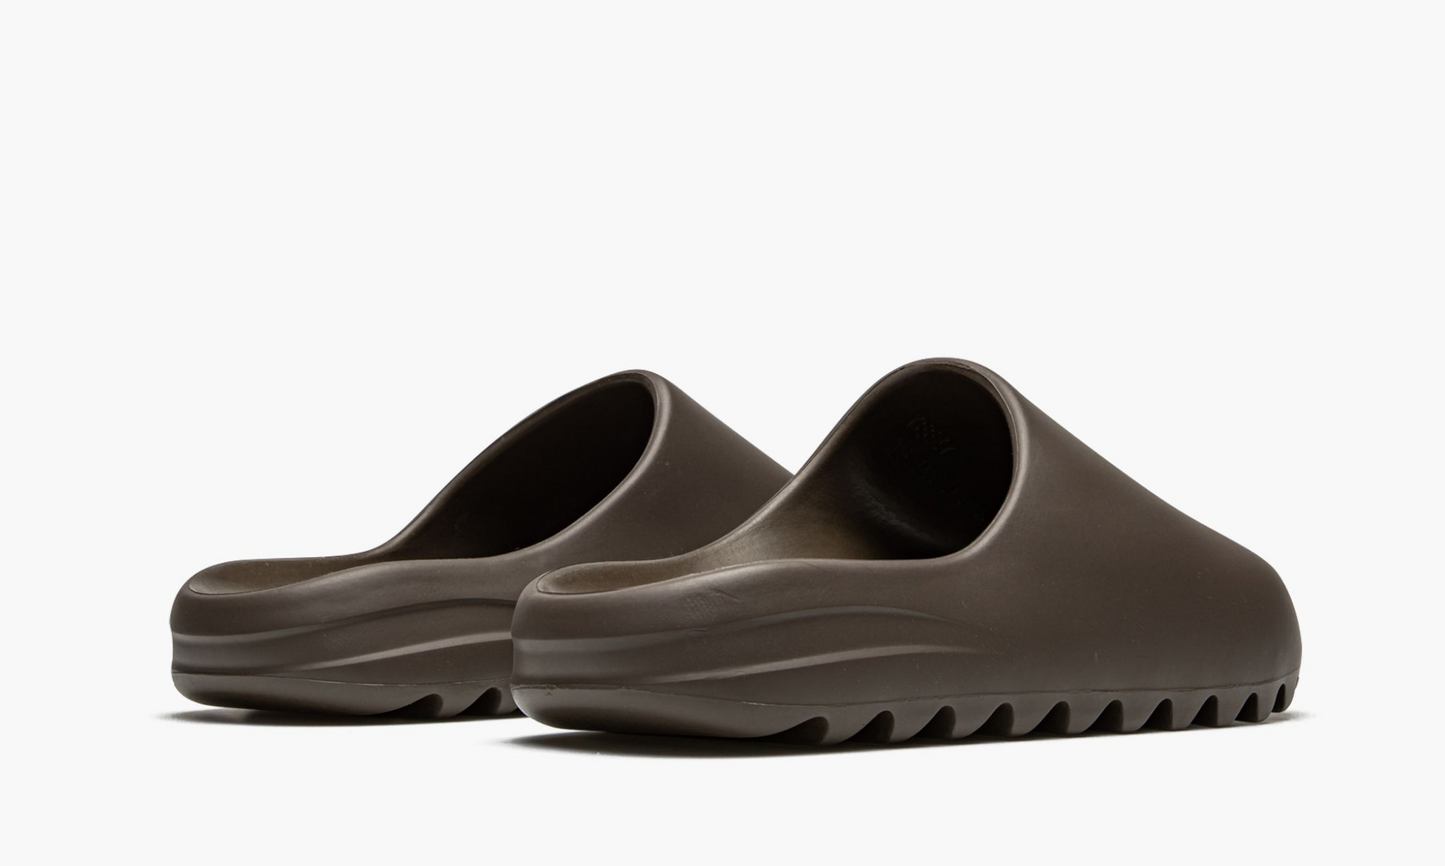 Adidas Yeezy Slide "Soot" - G55495